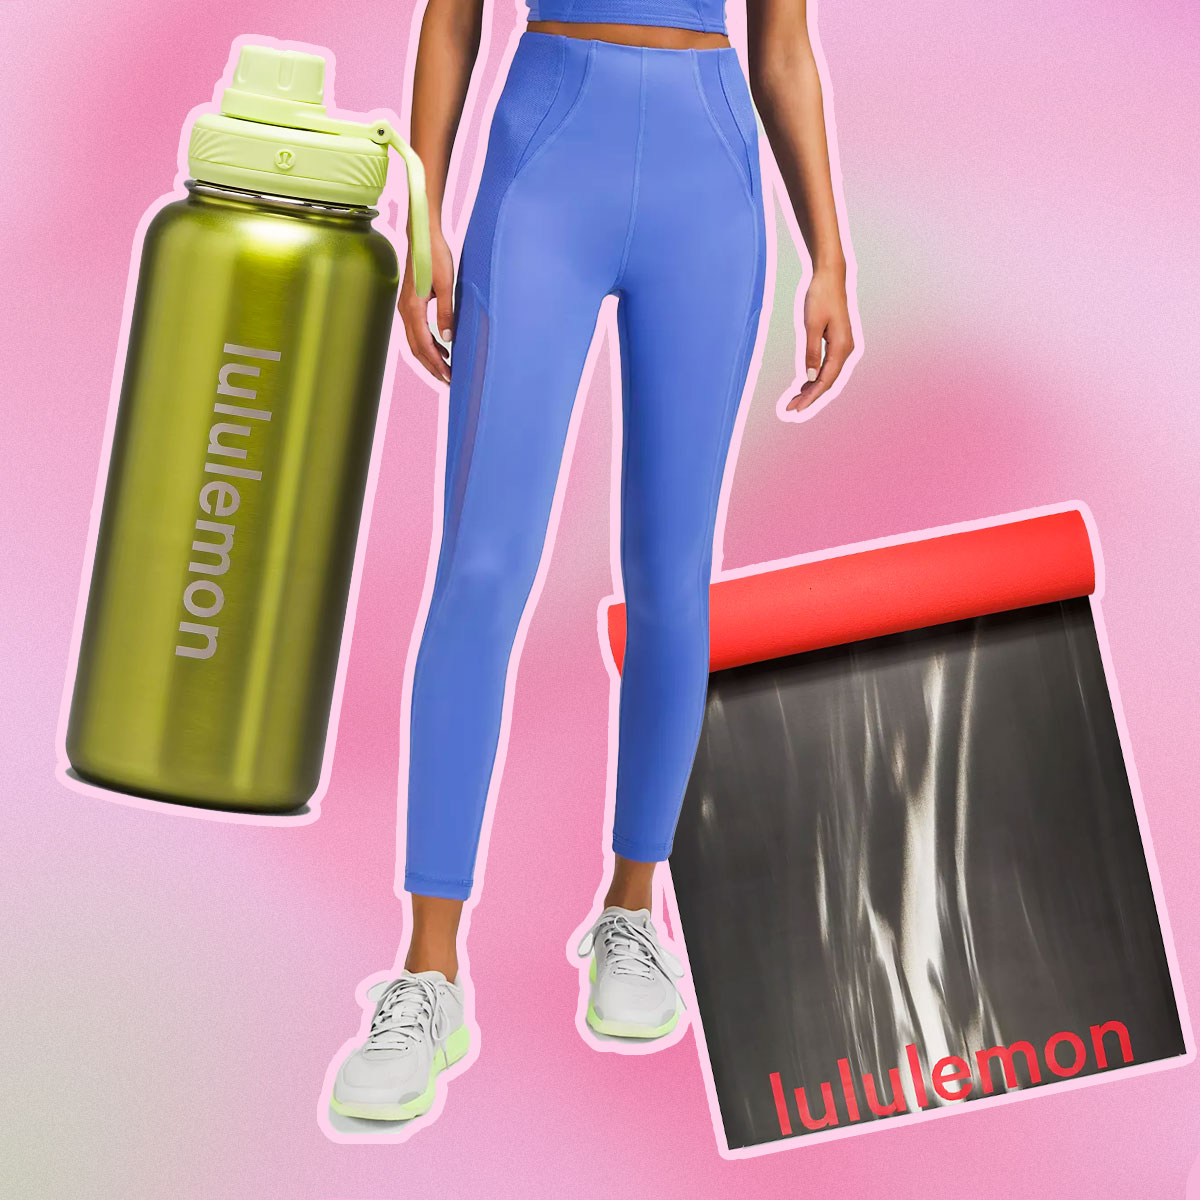 Lululemon Cyber Monday 2020 deals: Shop leggings, sports bras and